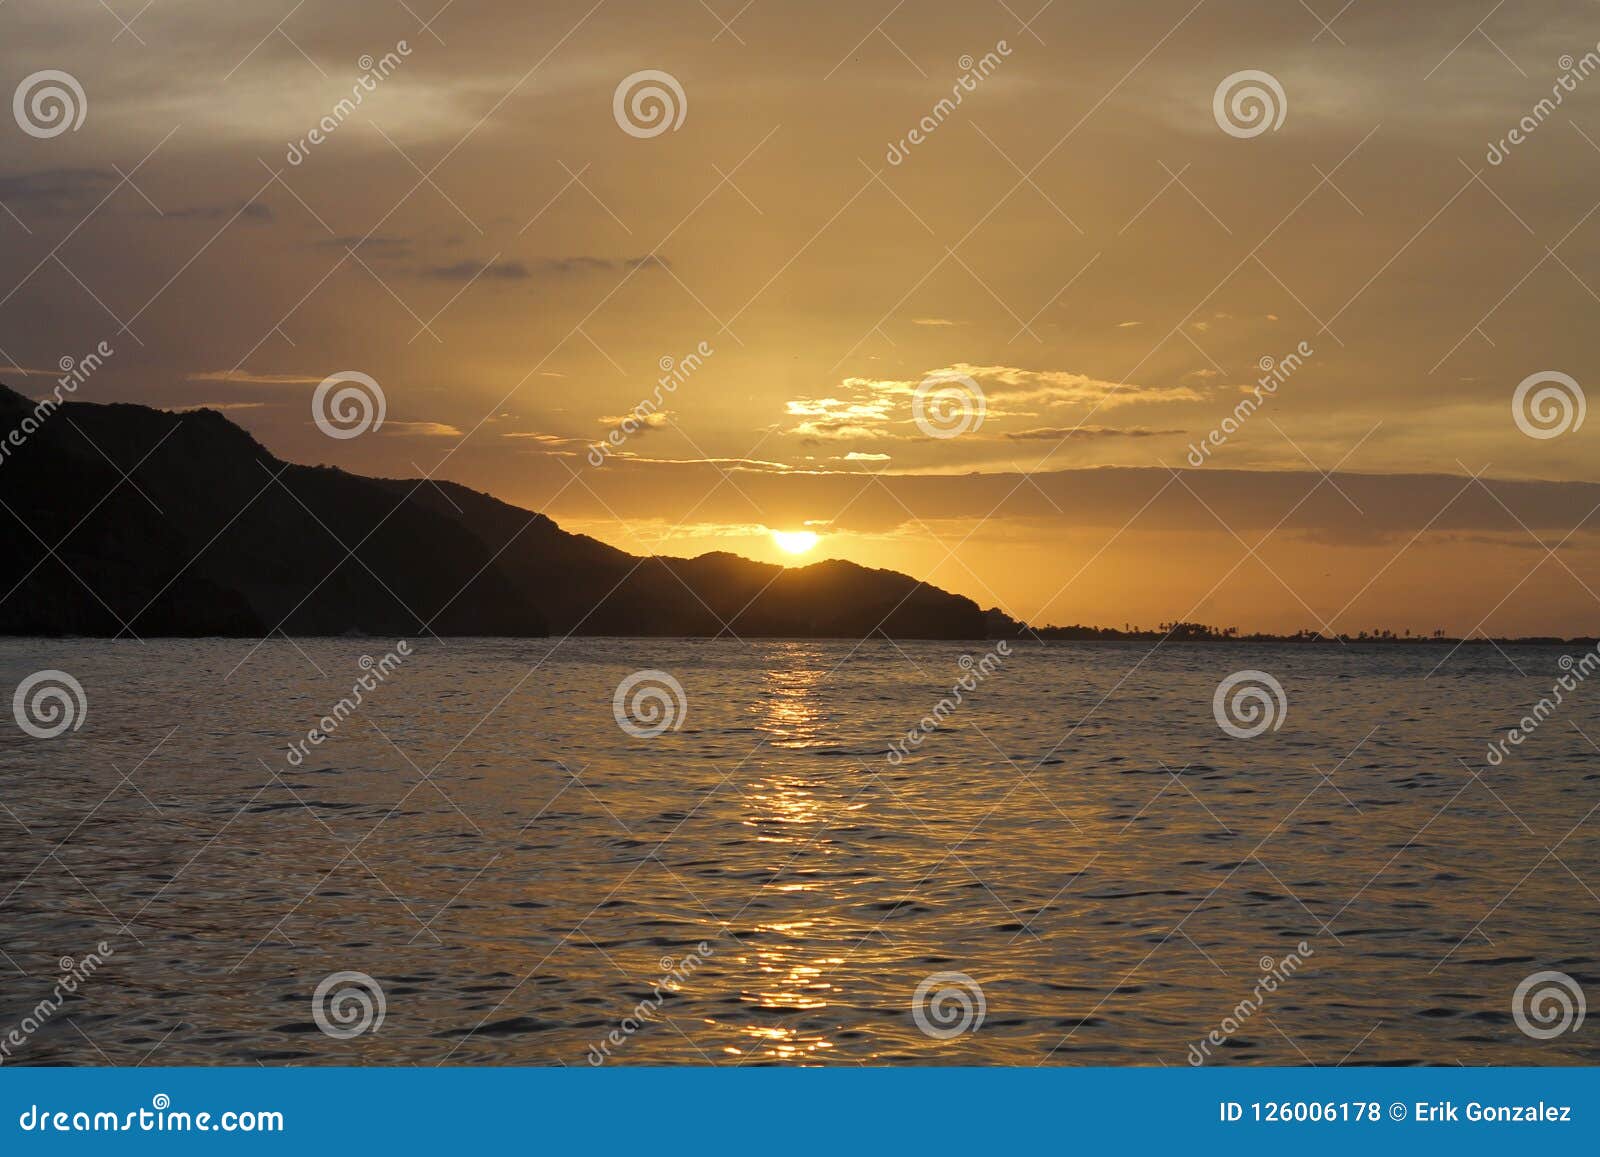 sunset in rio caribe, venezuela